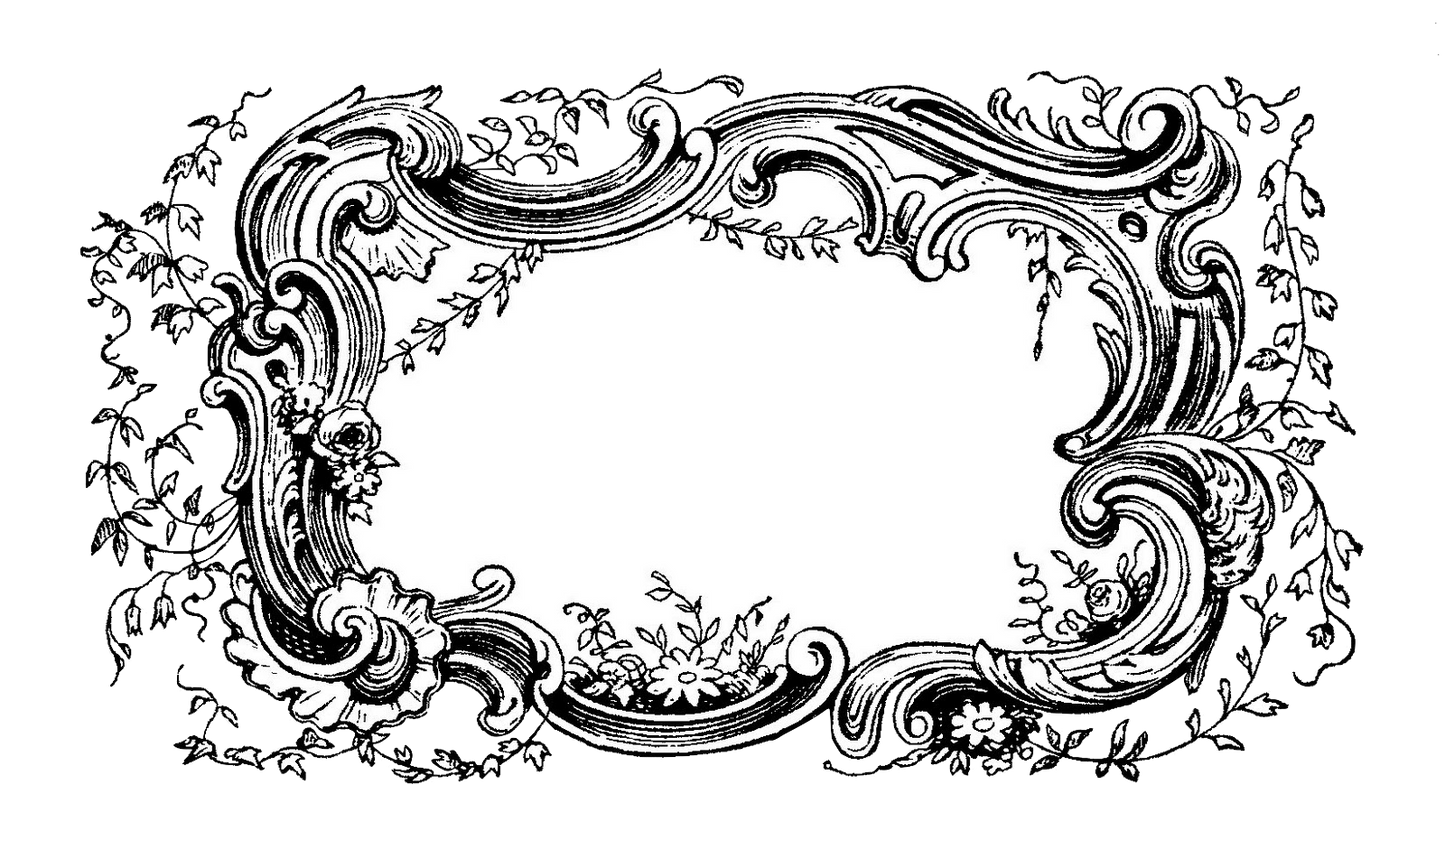 #3 Ornate Engraved Rococo Baroque Black & White Window Frames